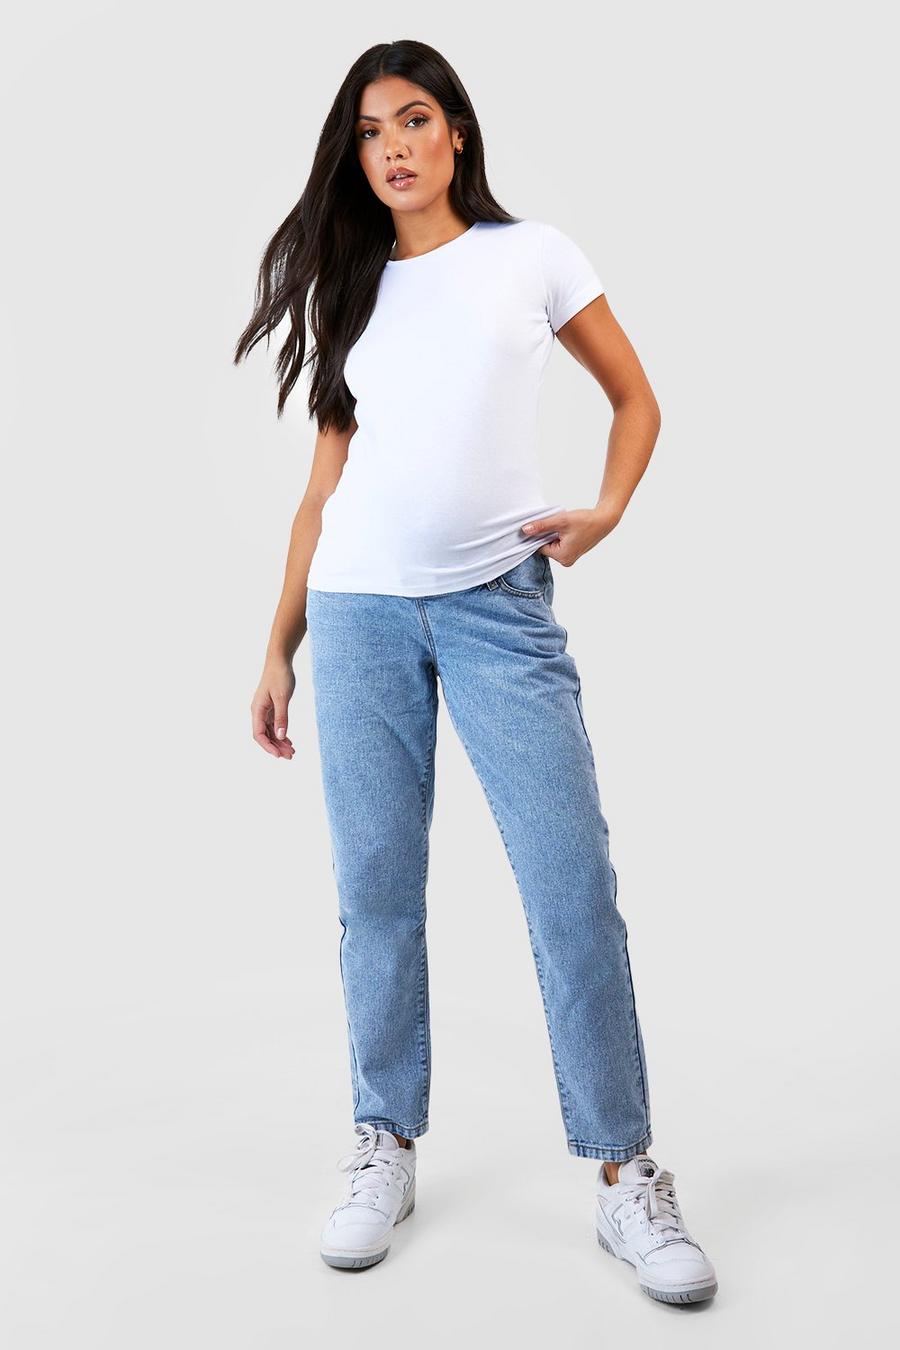 Maternity Jeans, Pregnancy Jeans & Jeggings